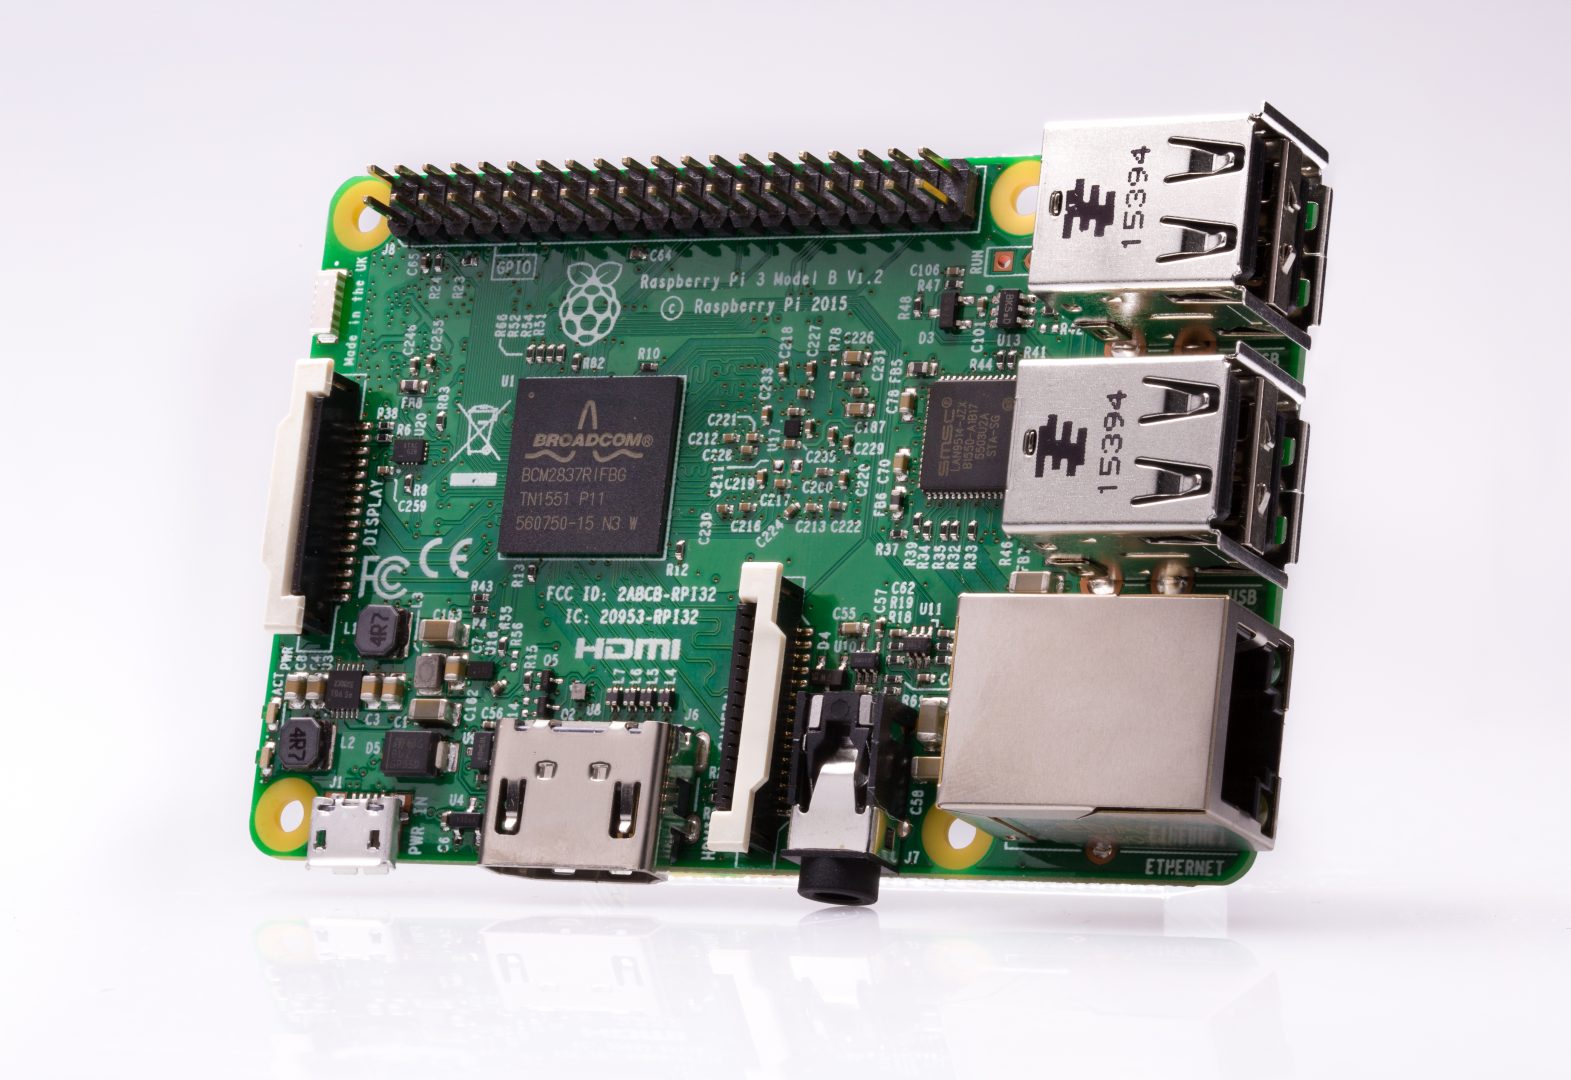 Raspberry Pi 3 Model B (Power Supply Included) kit